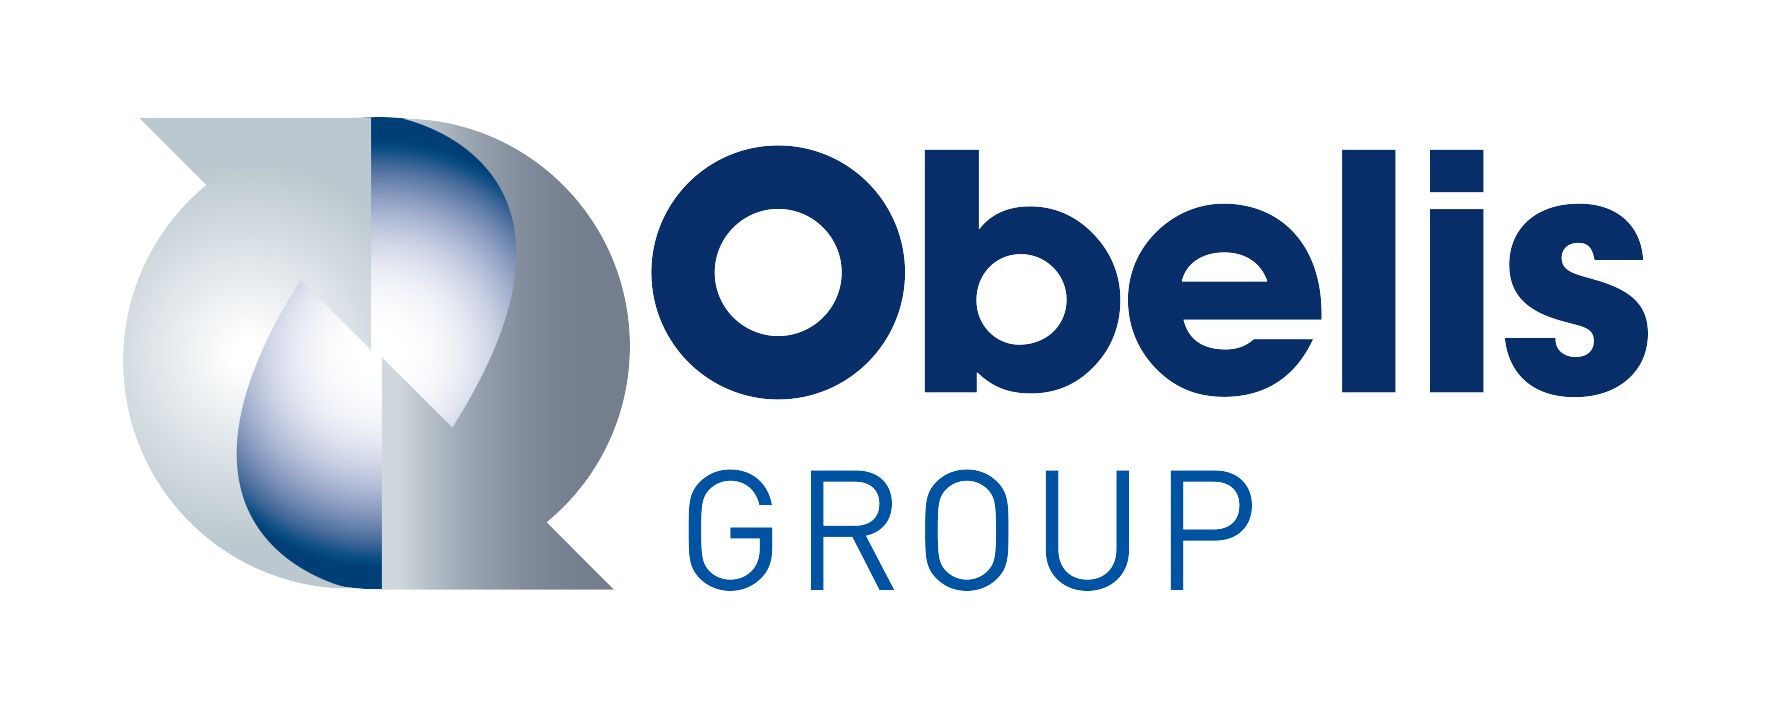 Obelis Group